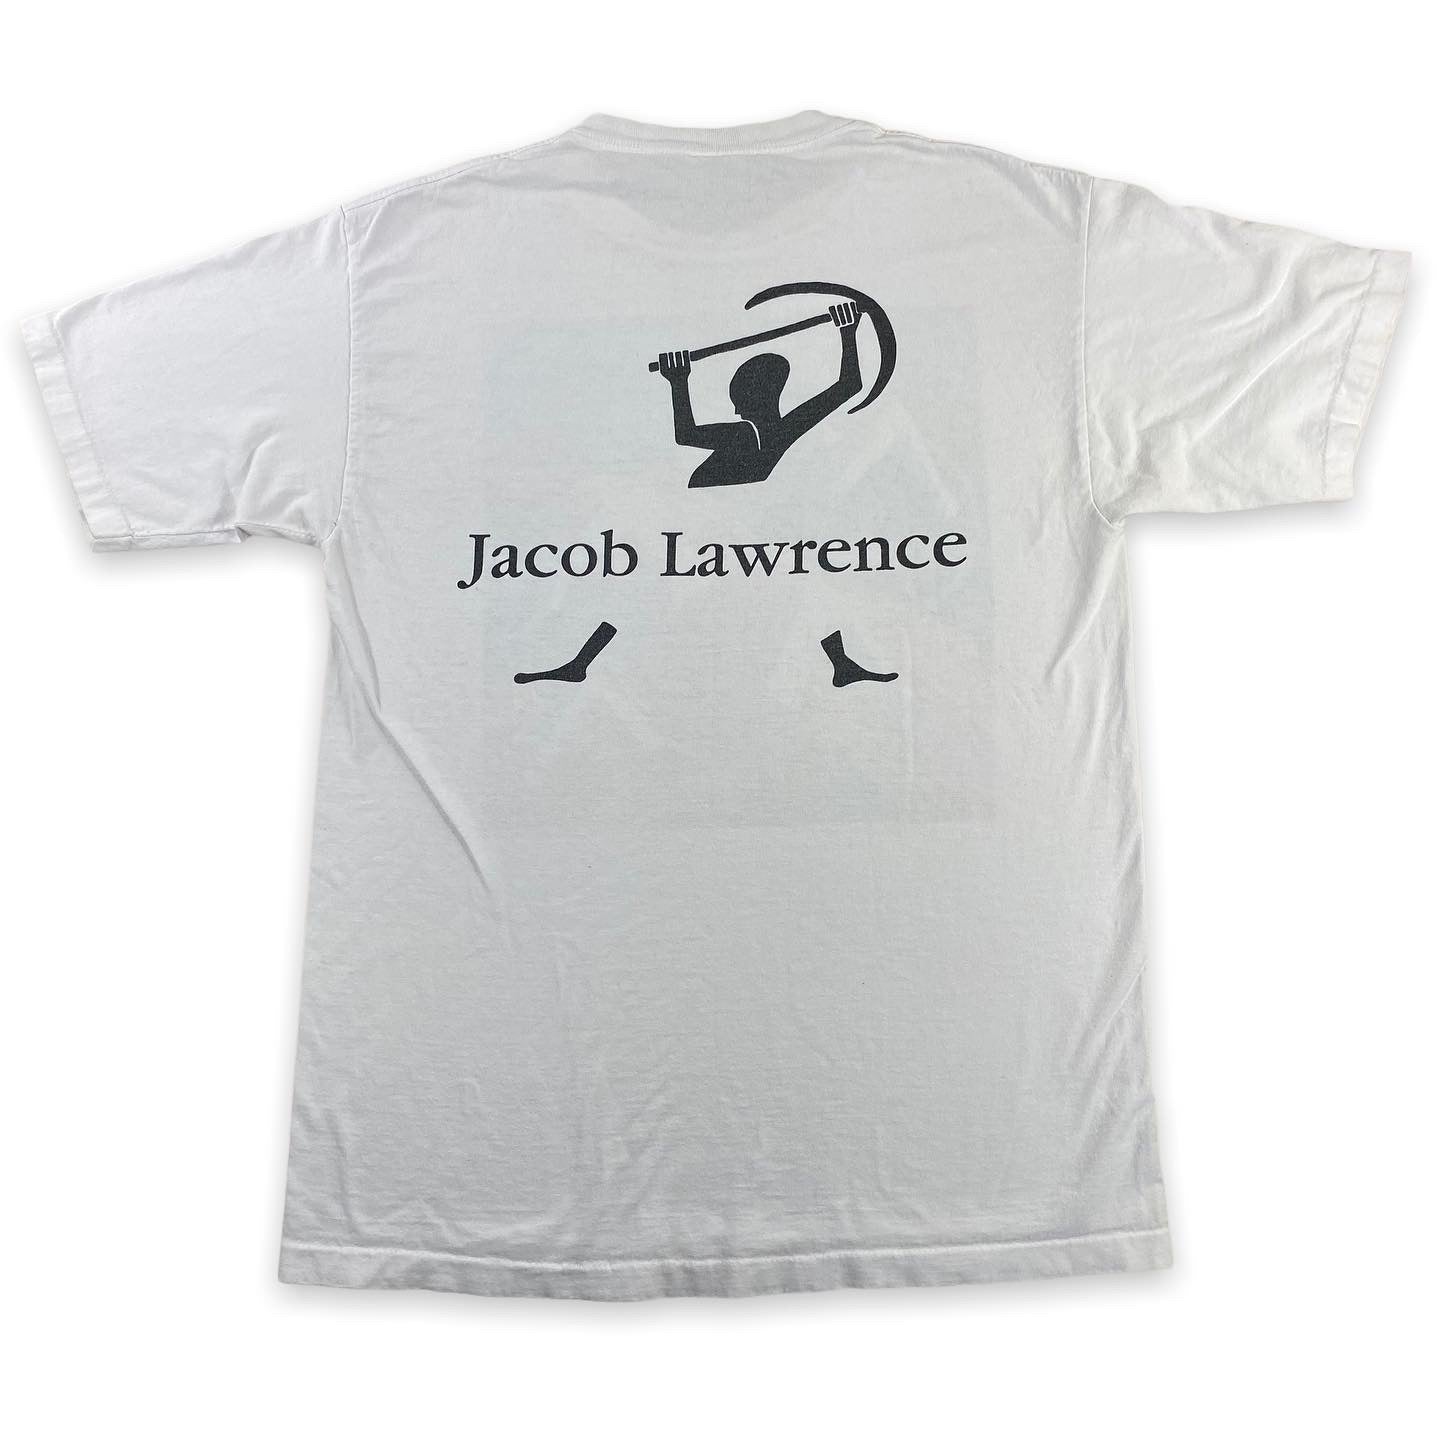 Jacob Lawrence tee Large